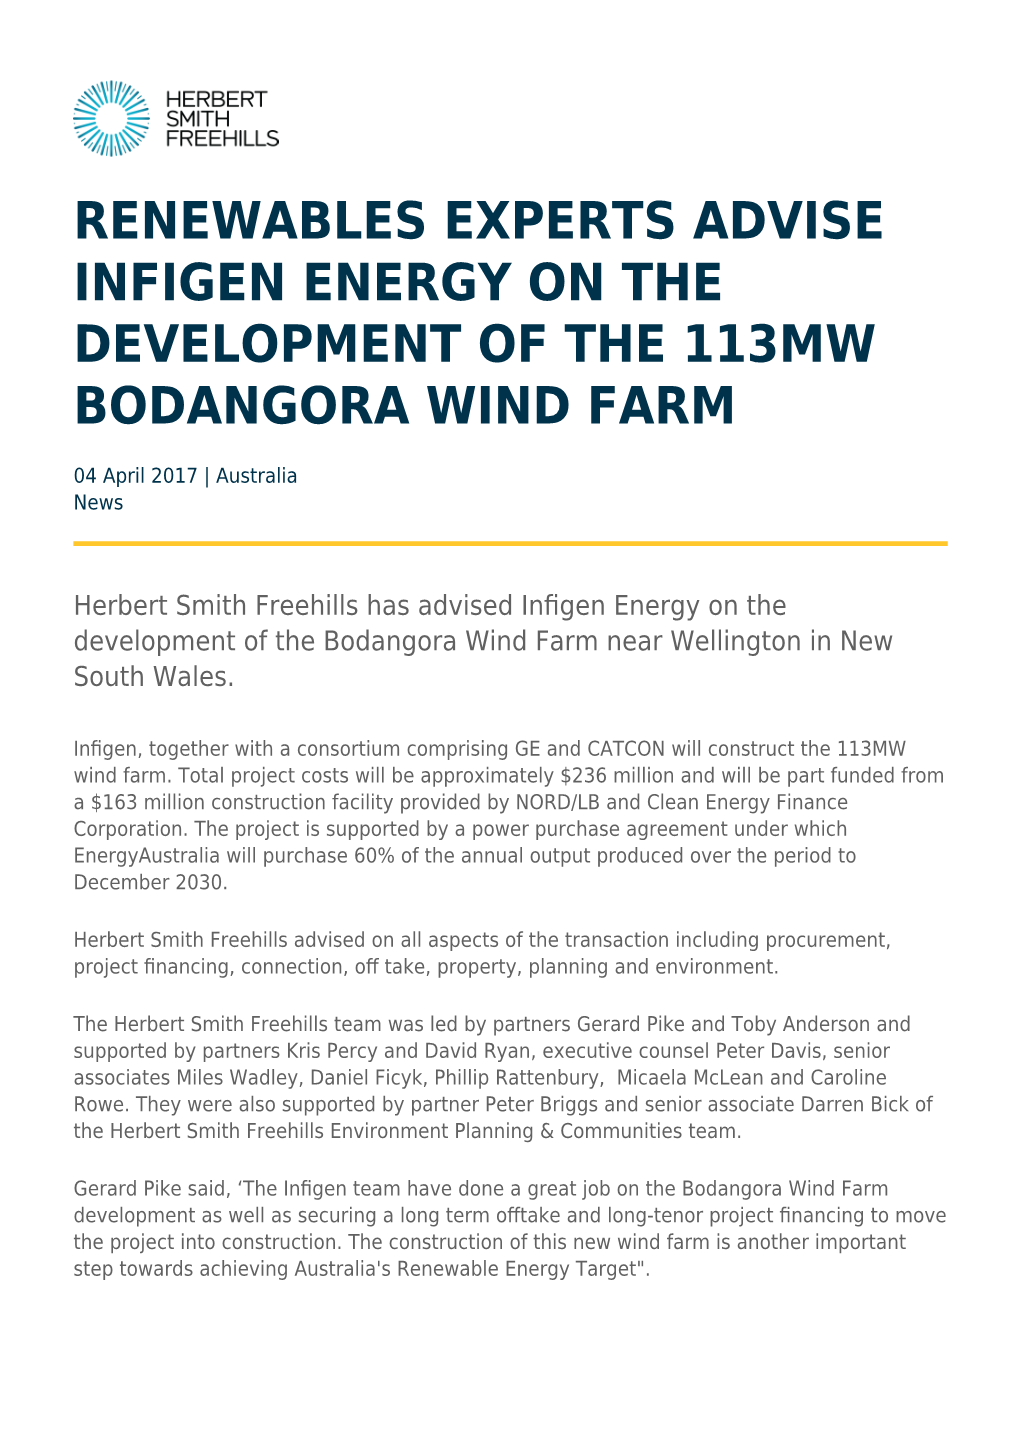 Renewables Experts Advise Infigen Energy on the Development of the 113Mw Bodangora Wind Farm